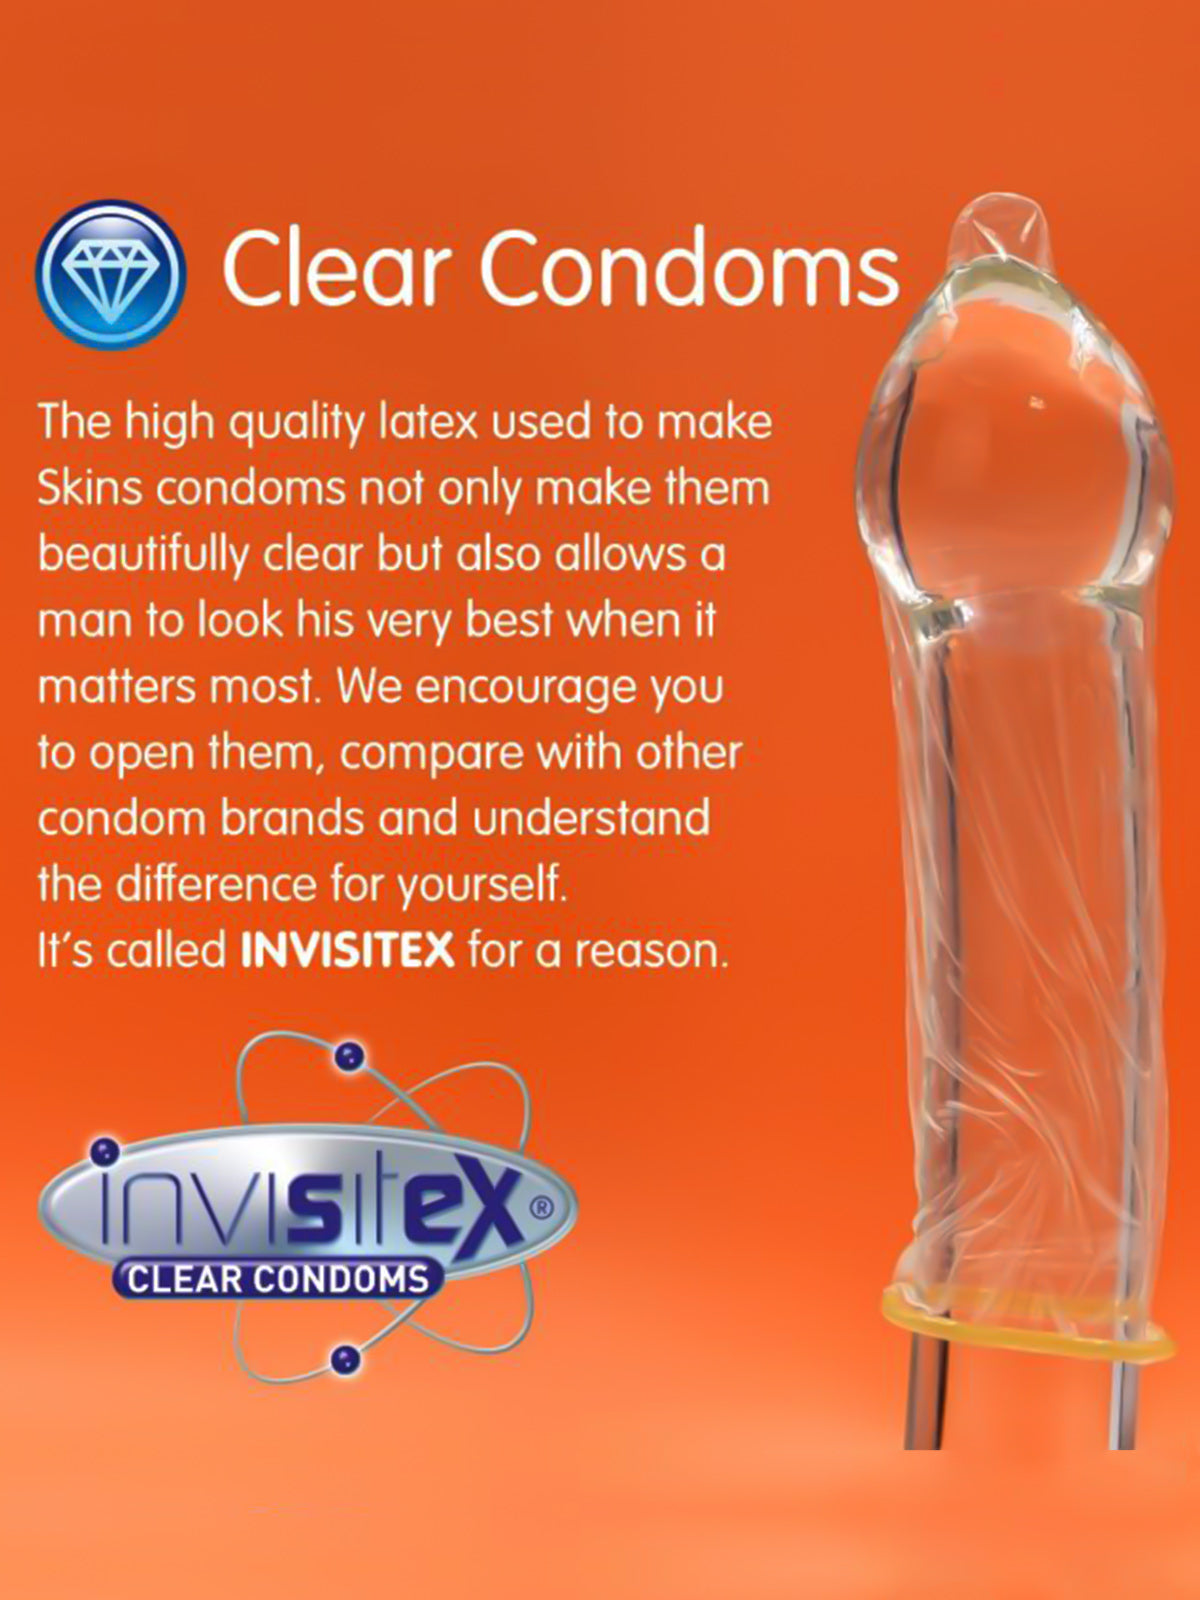 Skins (UK) Condoms Ultra Thin - 4 Pack